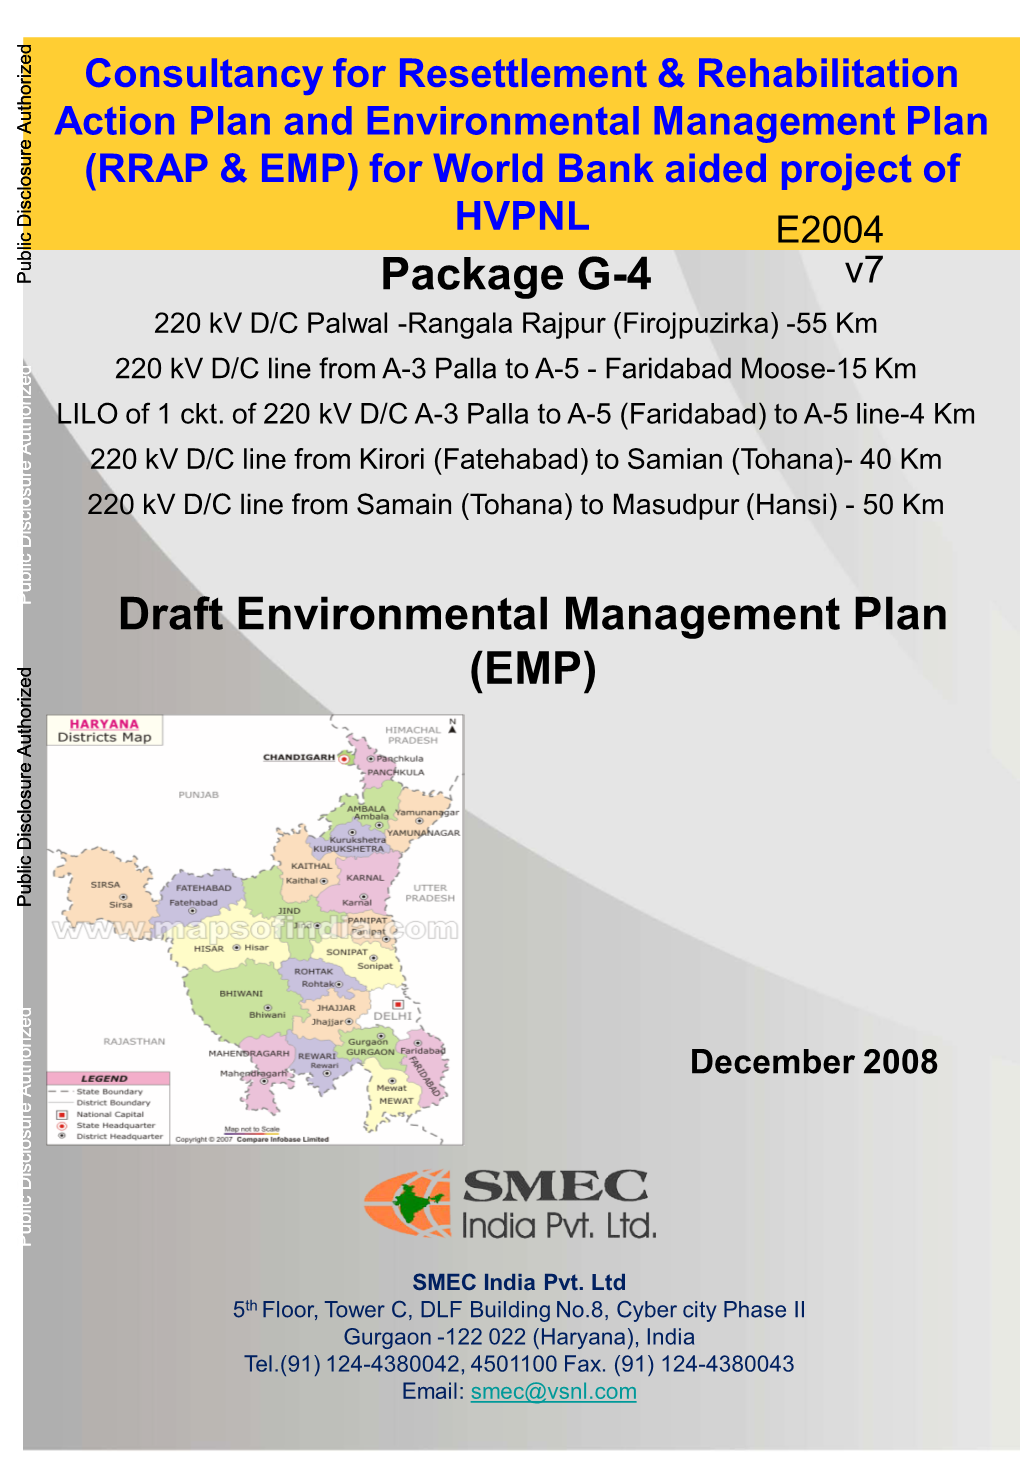 December 2008 Draft Environmental Management Plan